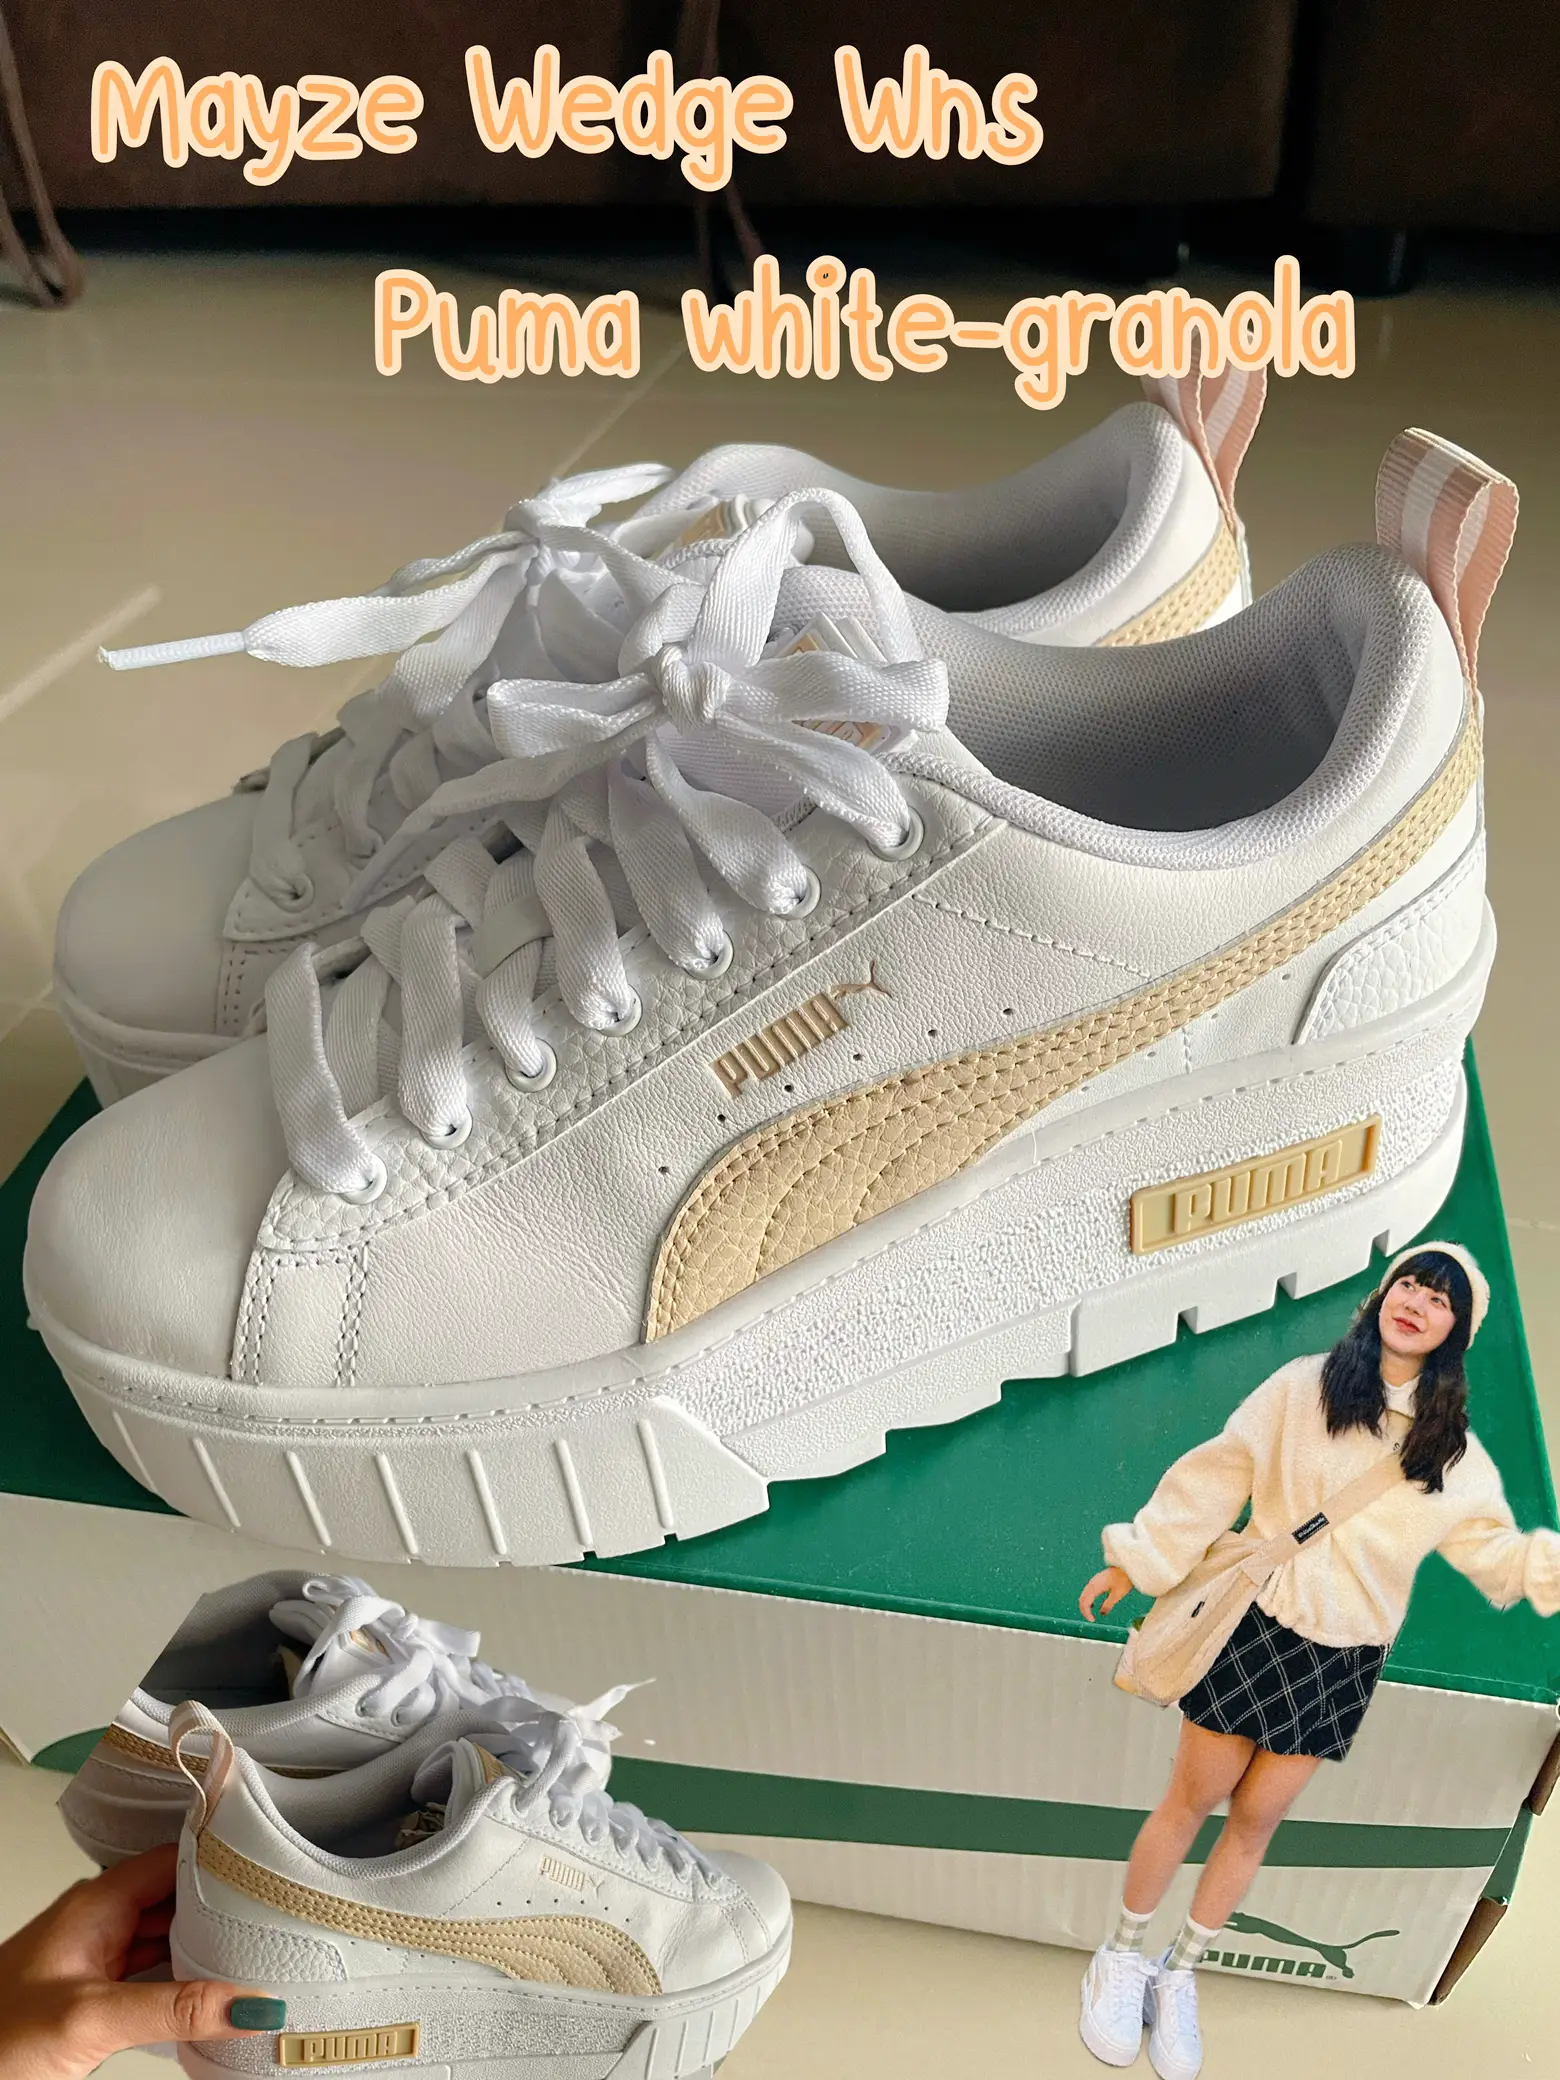 Chaussures et baskets femme Puma Mayze Wedge Wns Puma White-Granola